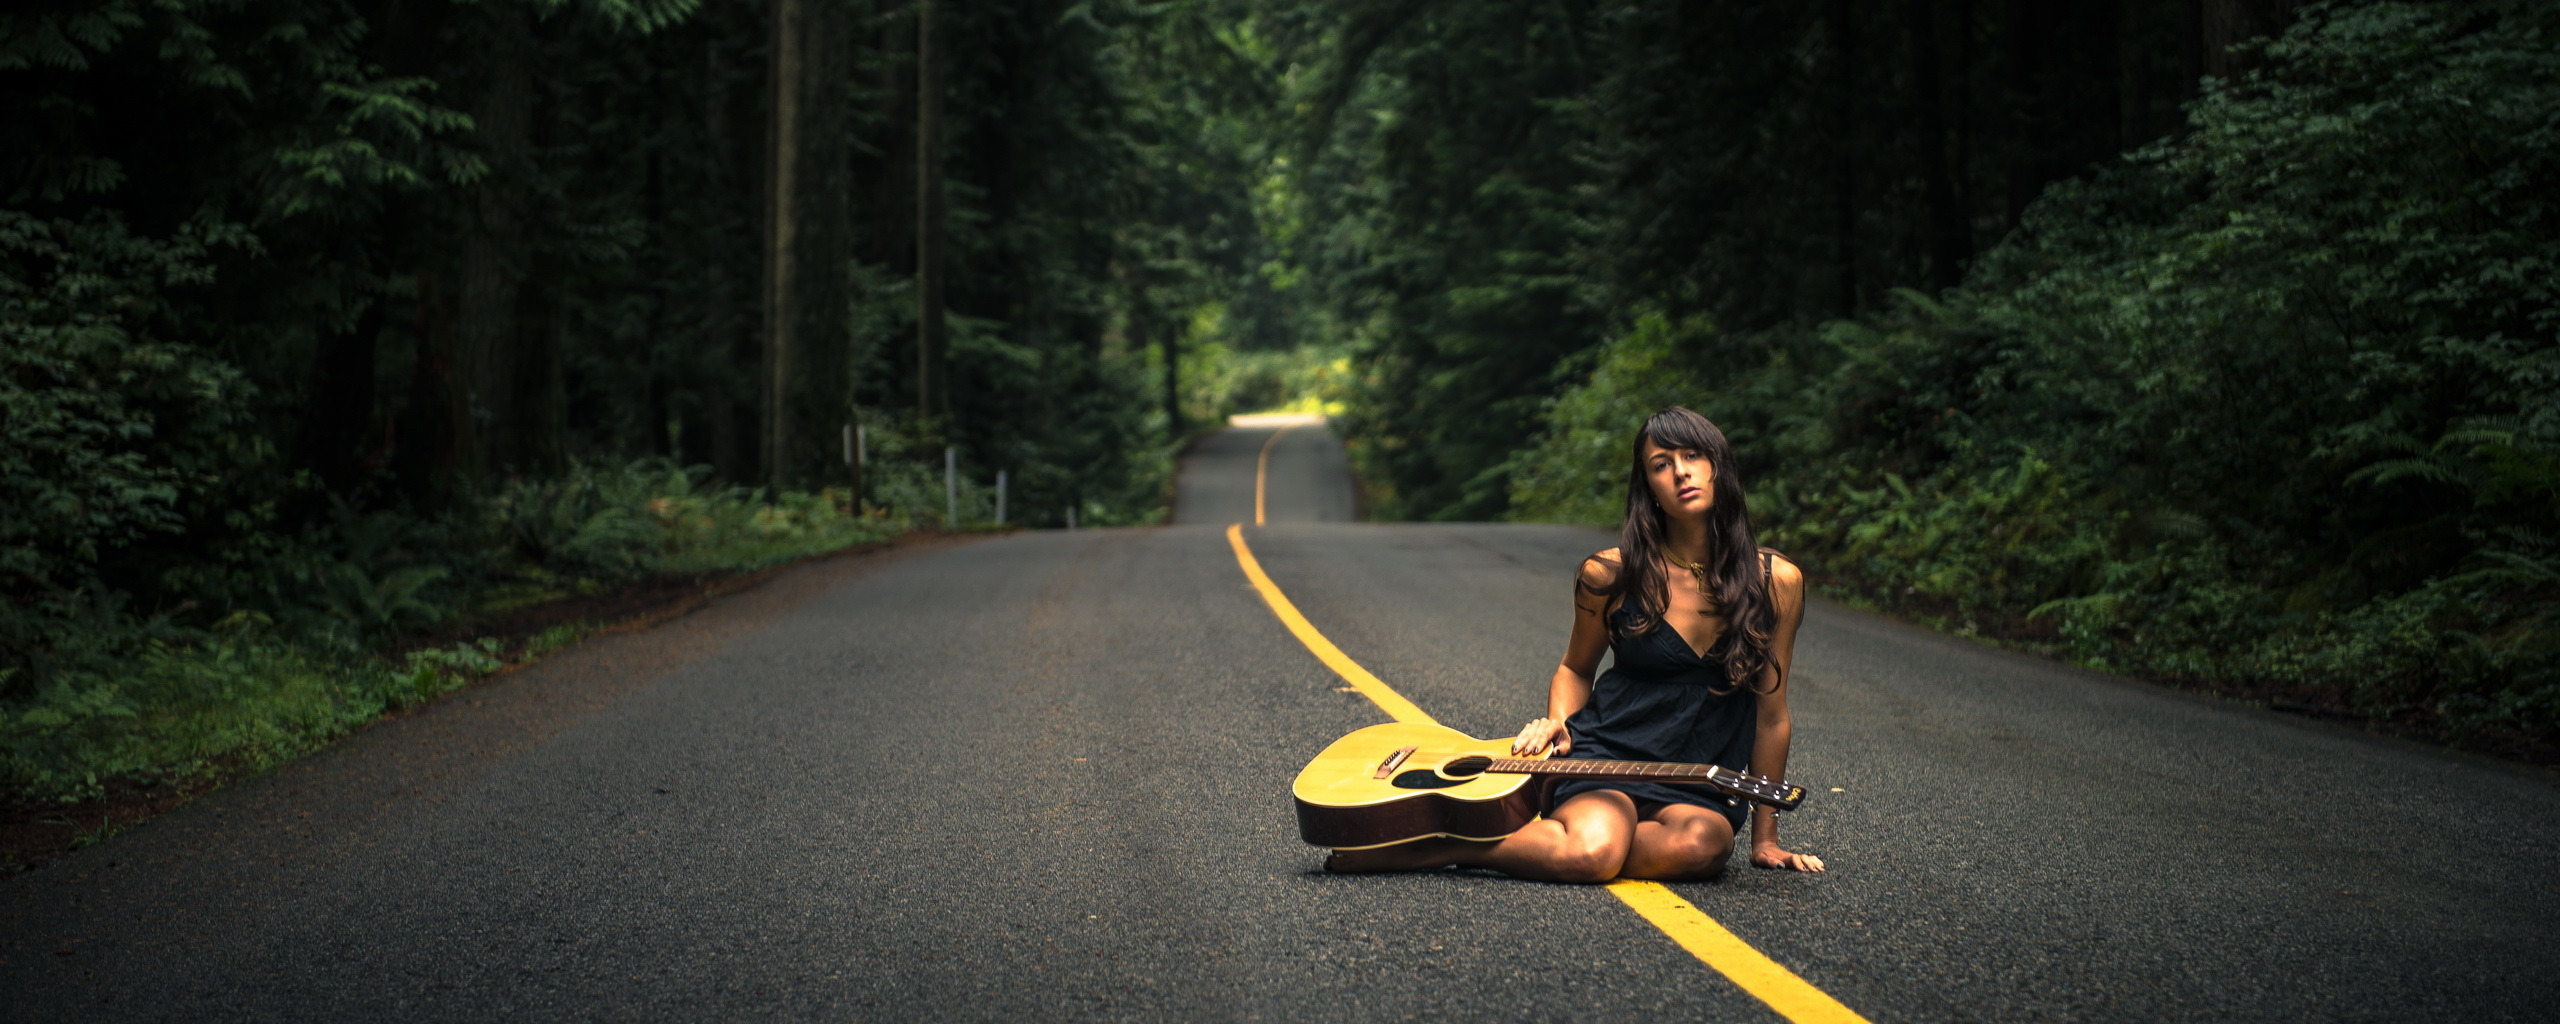 Девушка на дороге. Музыкальная дорога. Девушка с гитарой на дороге. Макет девушки на дороге.